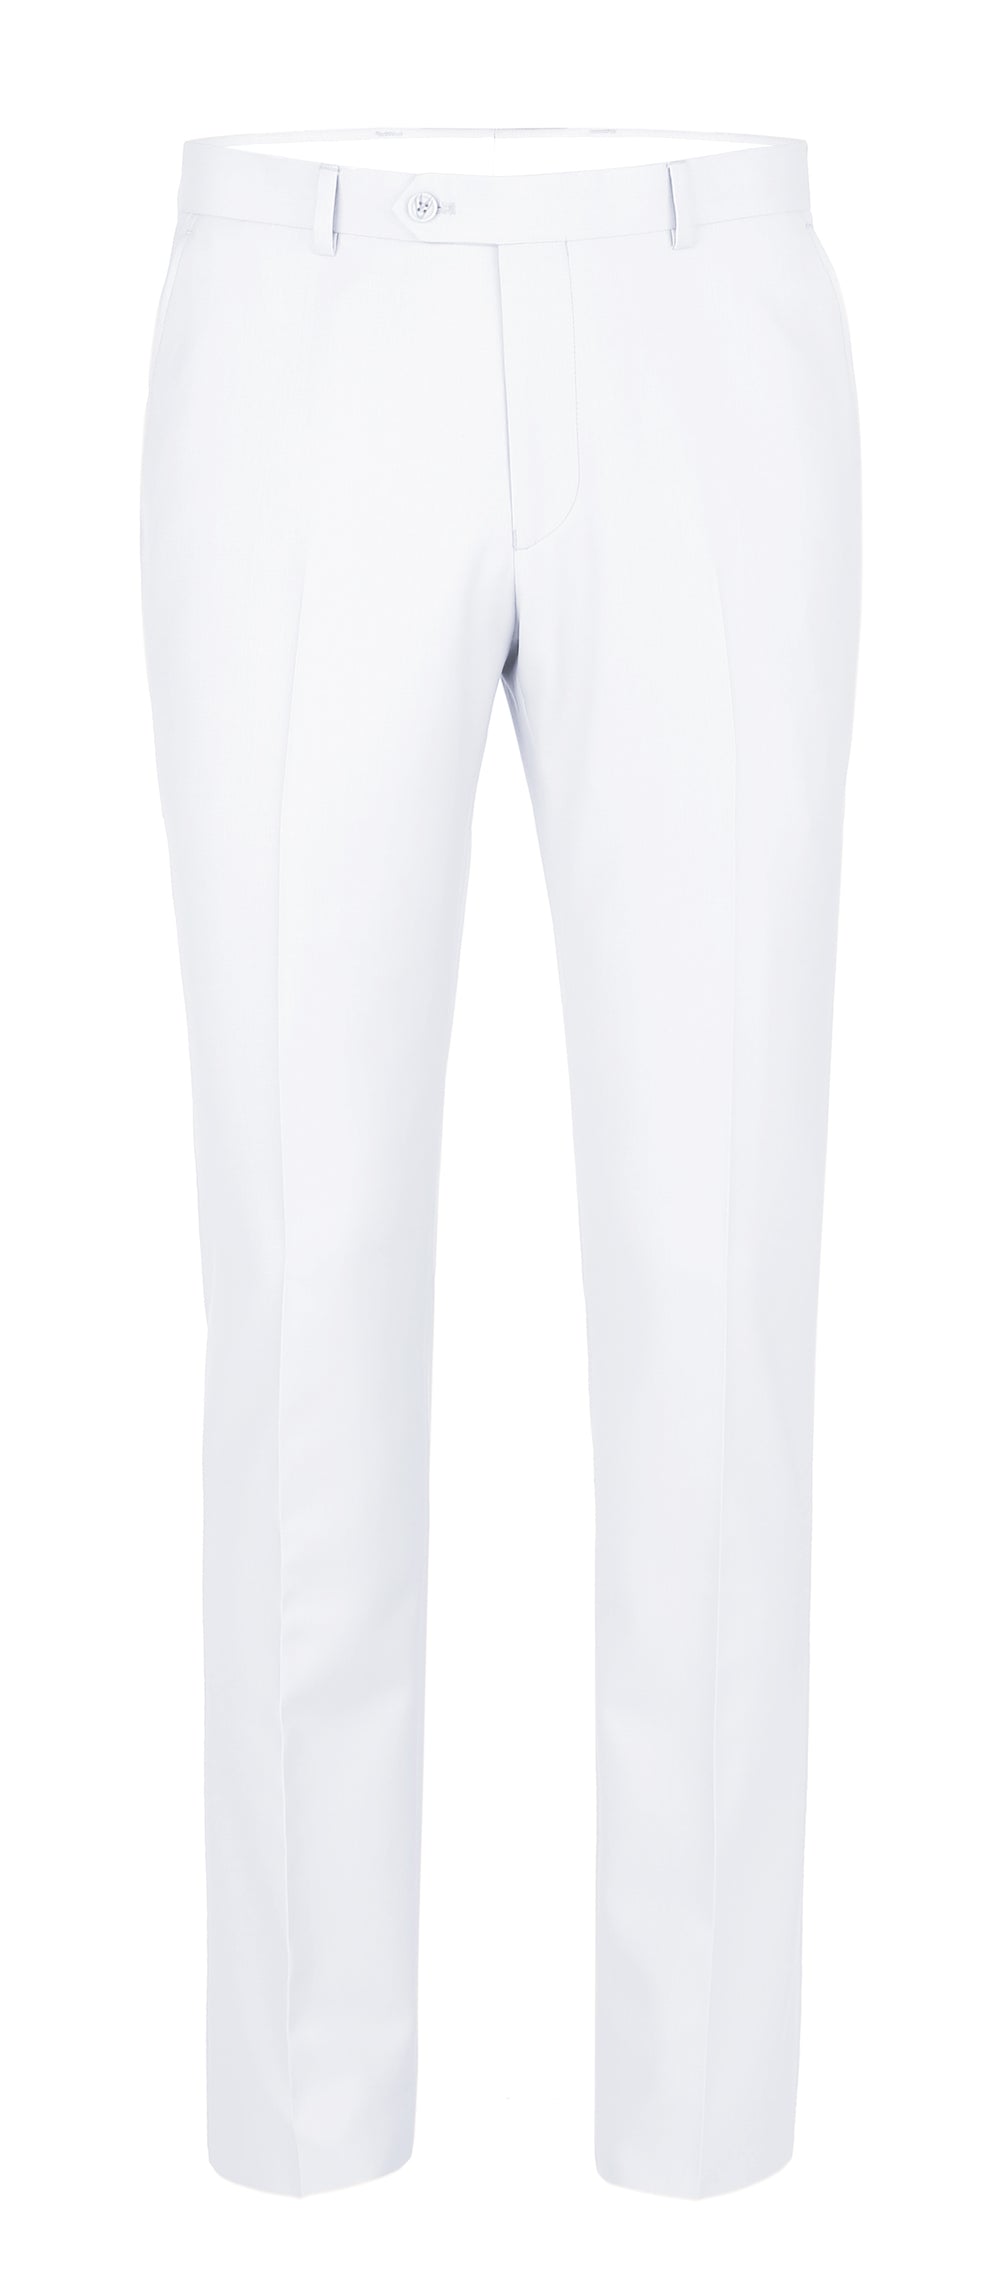 201-6 Men's White 2-Piece Single Breasted Notch Lapel Suit